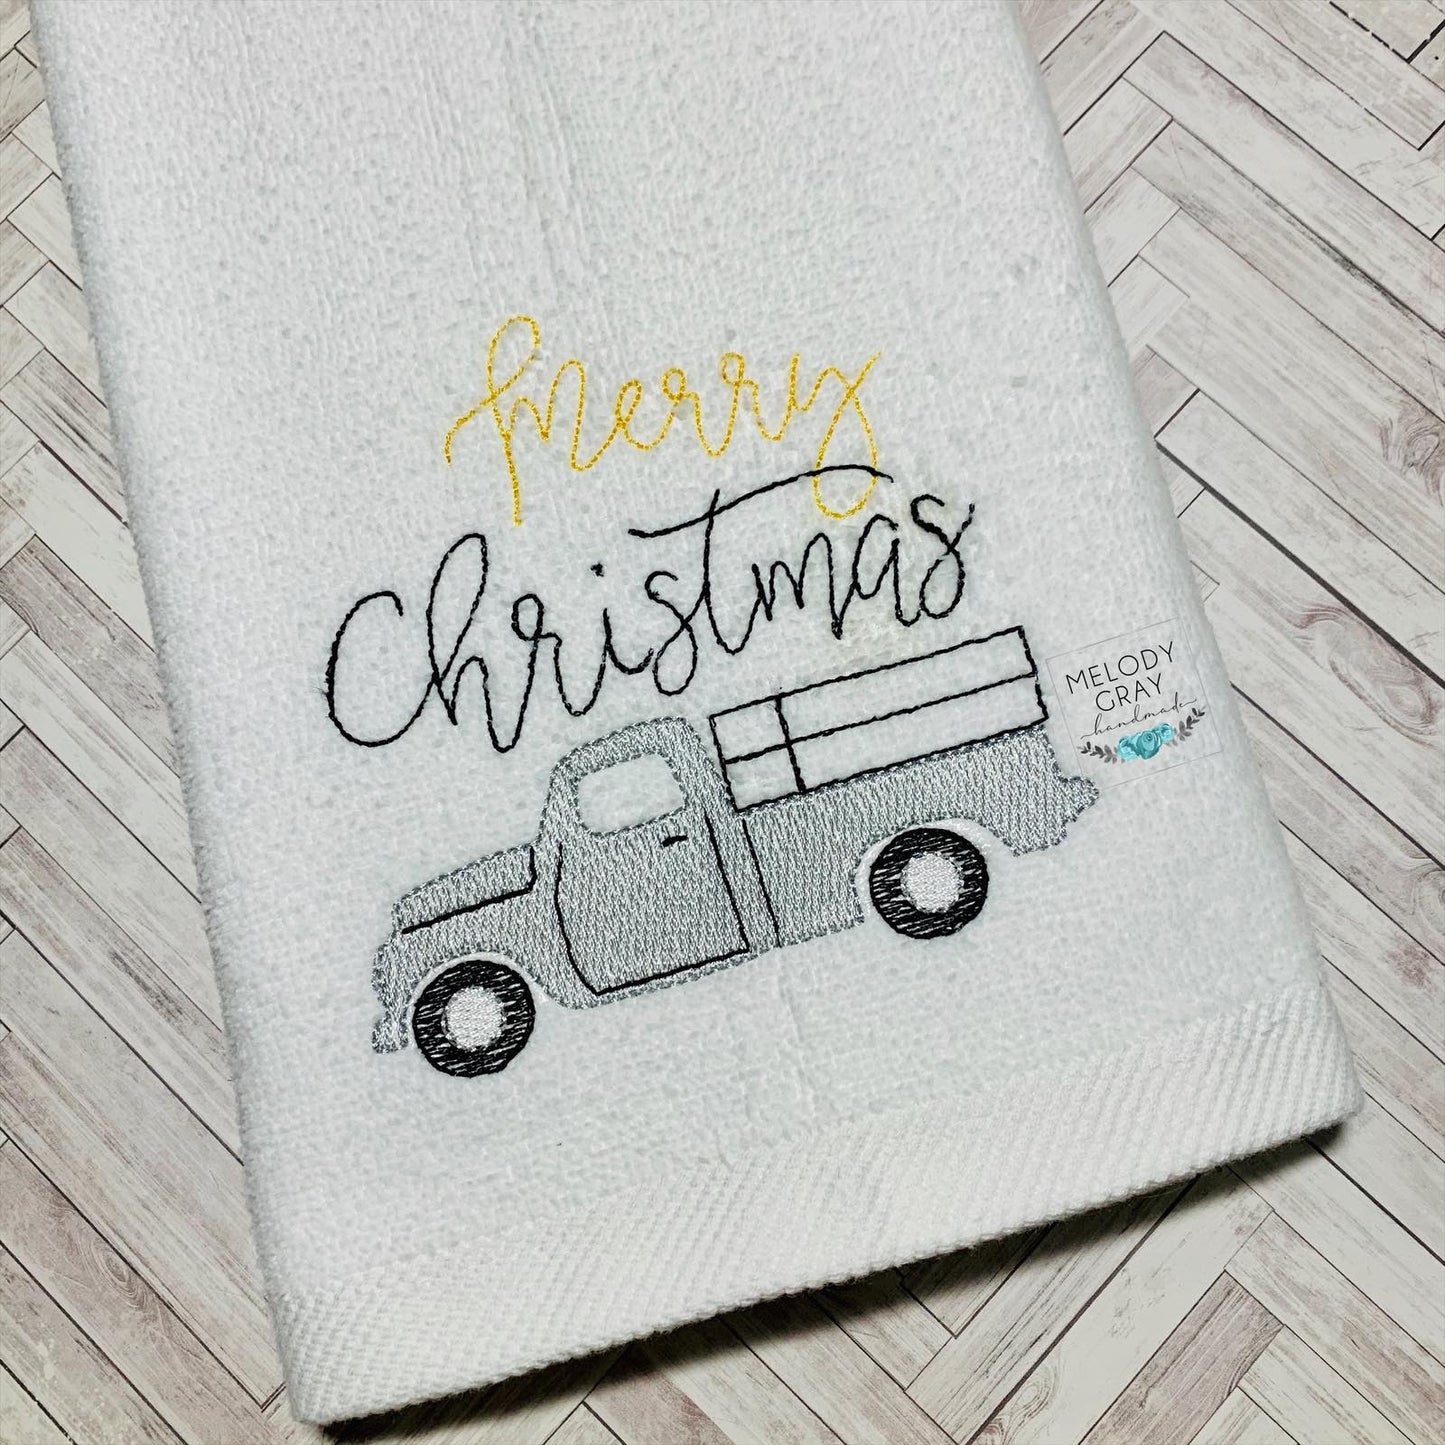 Farmhouse Christmas Towel Set - 2 Sizes - Digital Embroidery Design